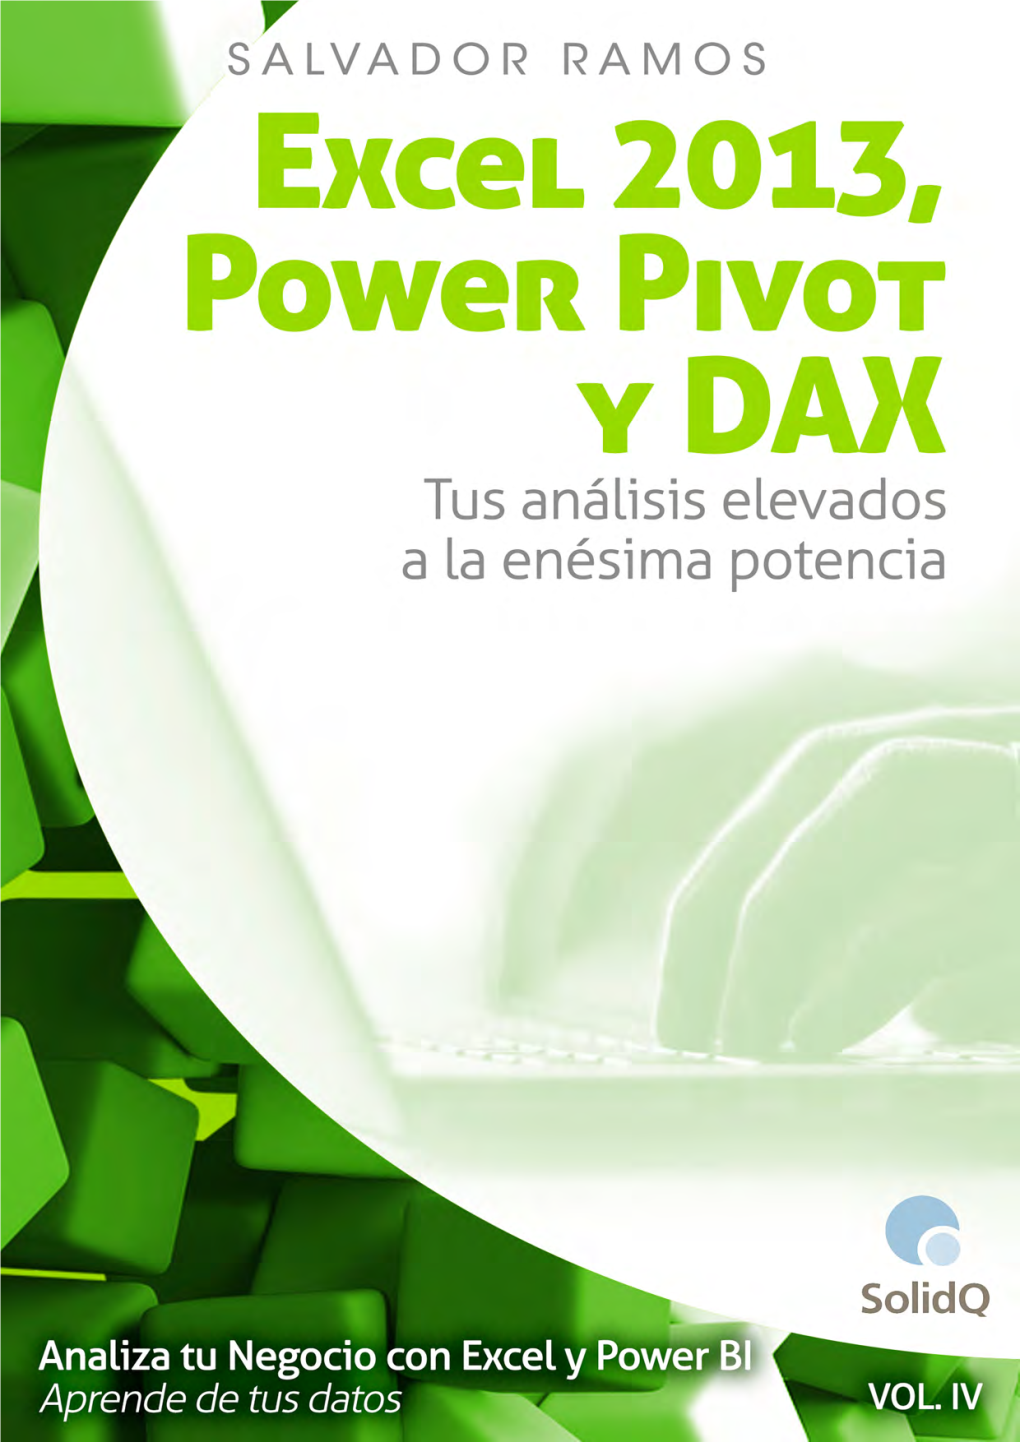 Excel 2013, Power Pivot Y DAX-Solidq-Ebook.Pdf